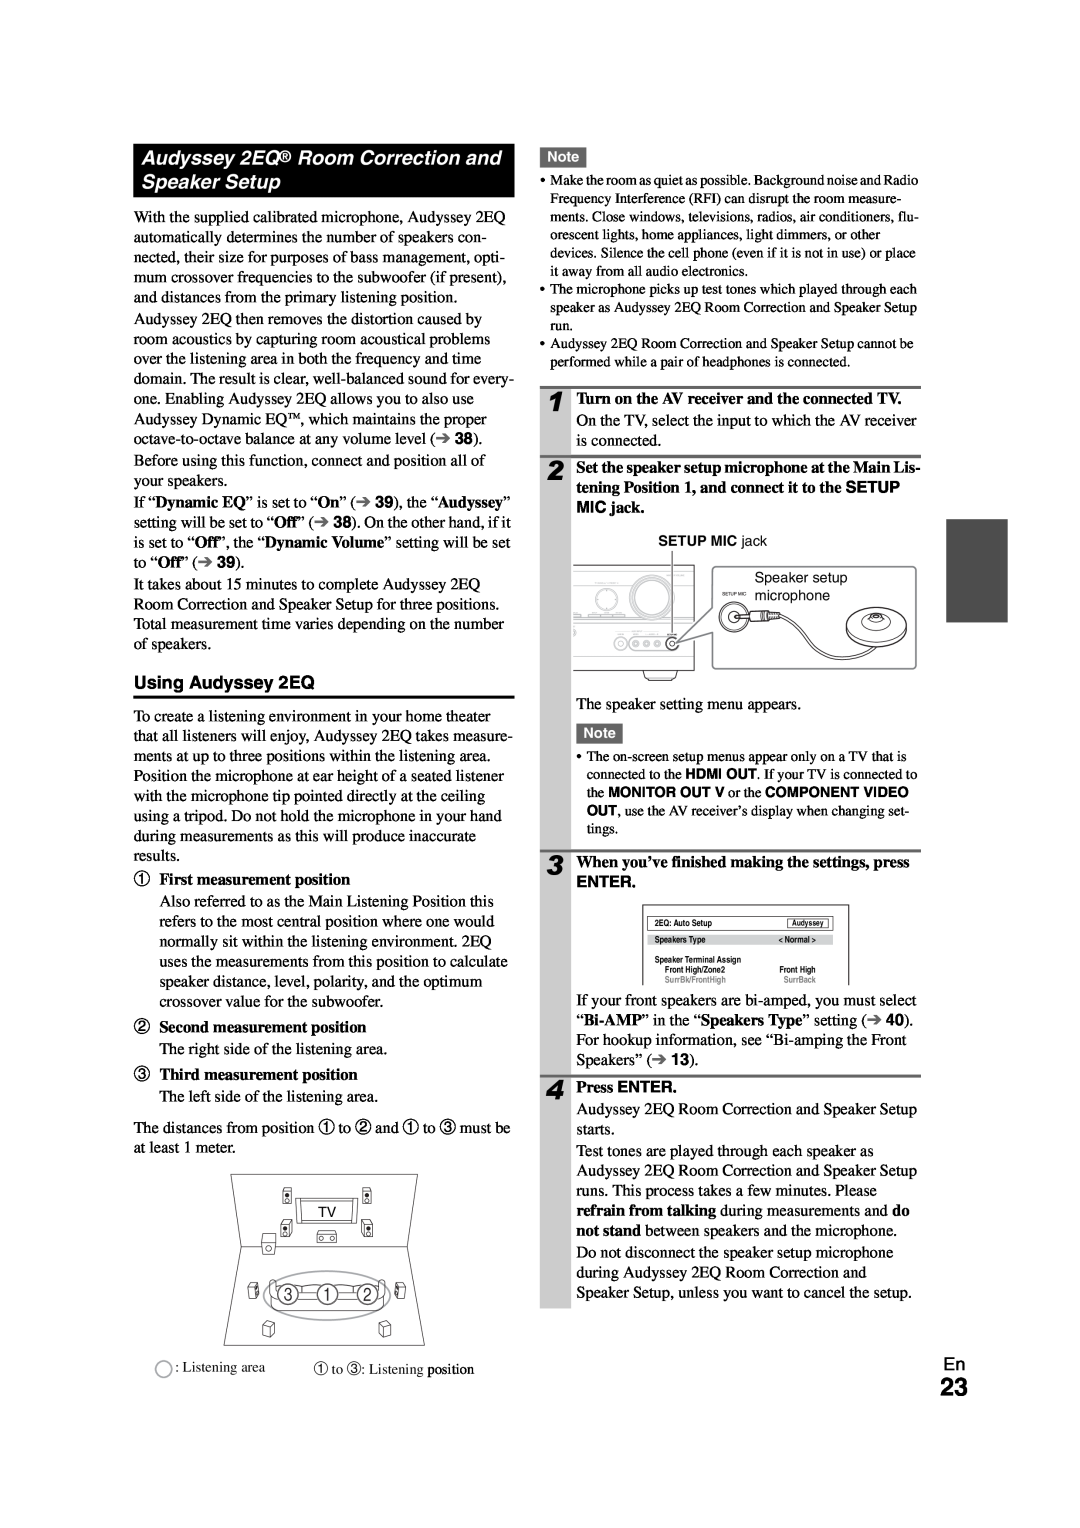 Onkyo TX-SR508 instruction manual Audyssey 2EQ Room Correction and, Speaker Setup, Using Audyssey 2EQ, Enter 